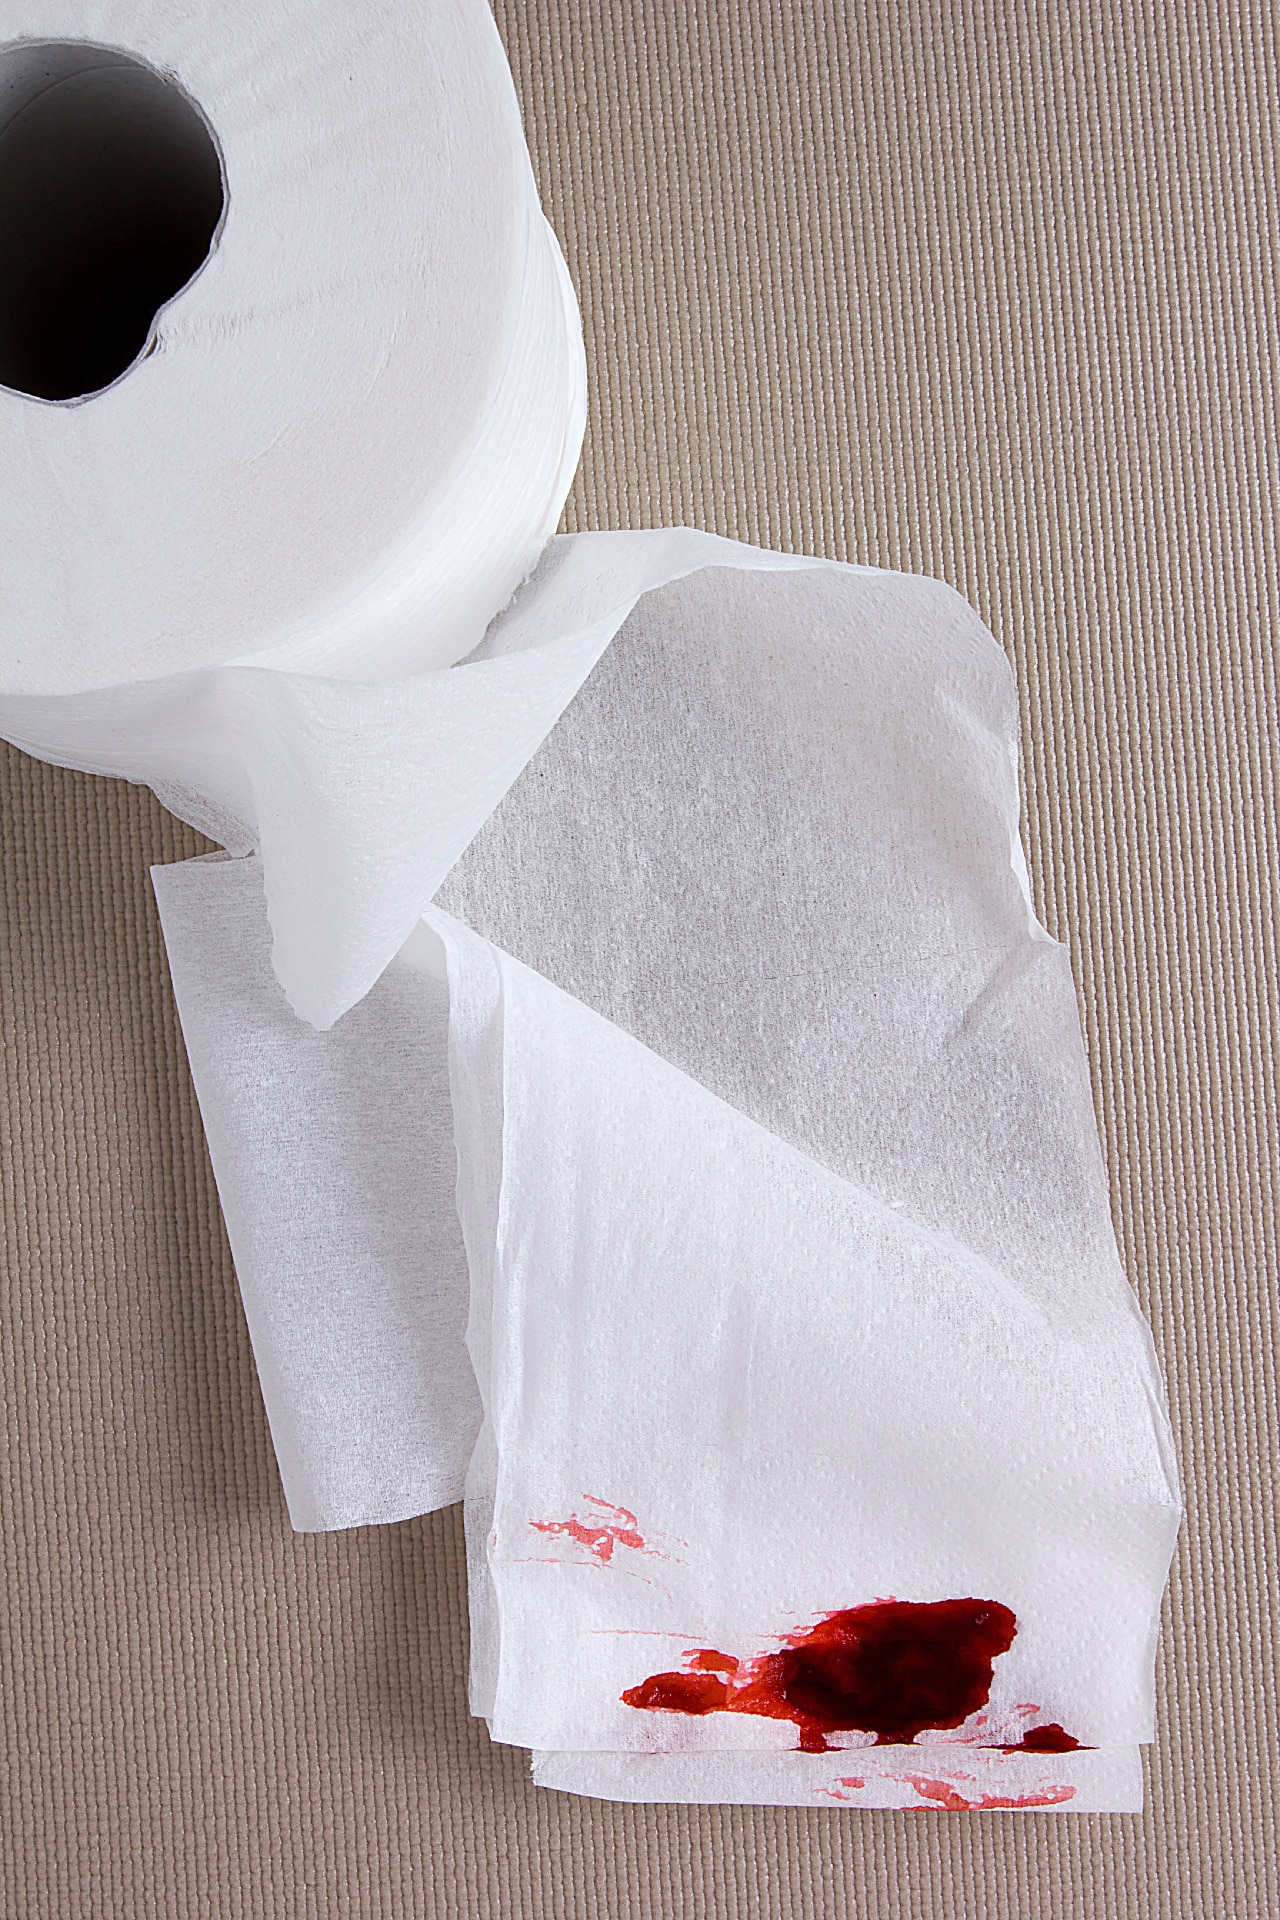 Blut am Toilettenpapier - besorgniserregend